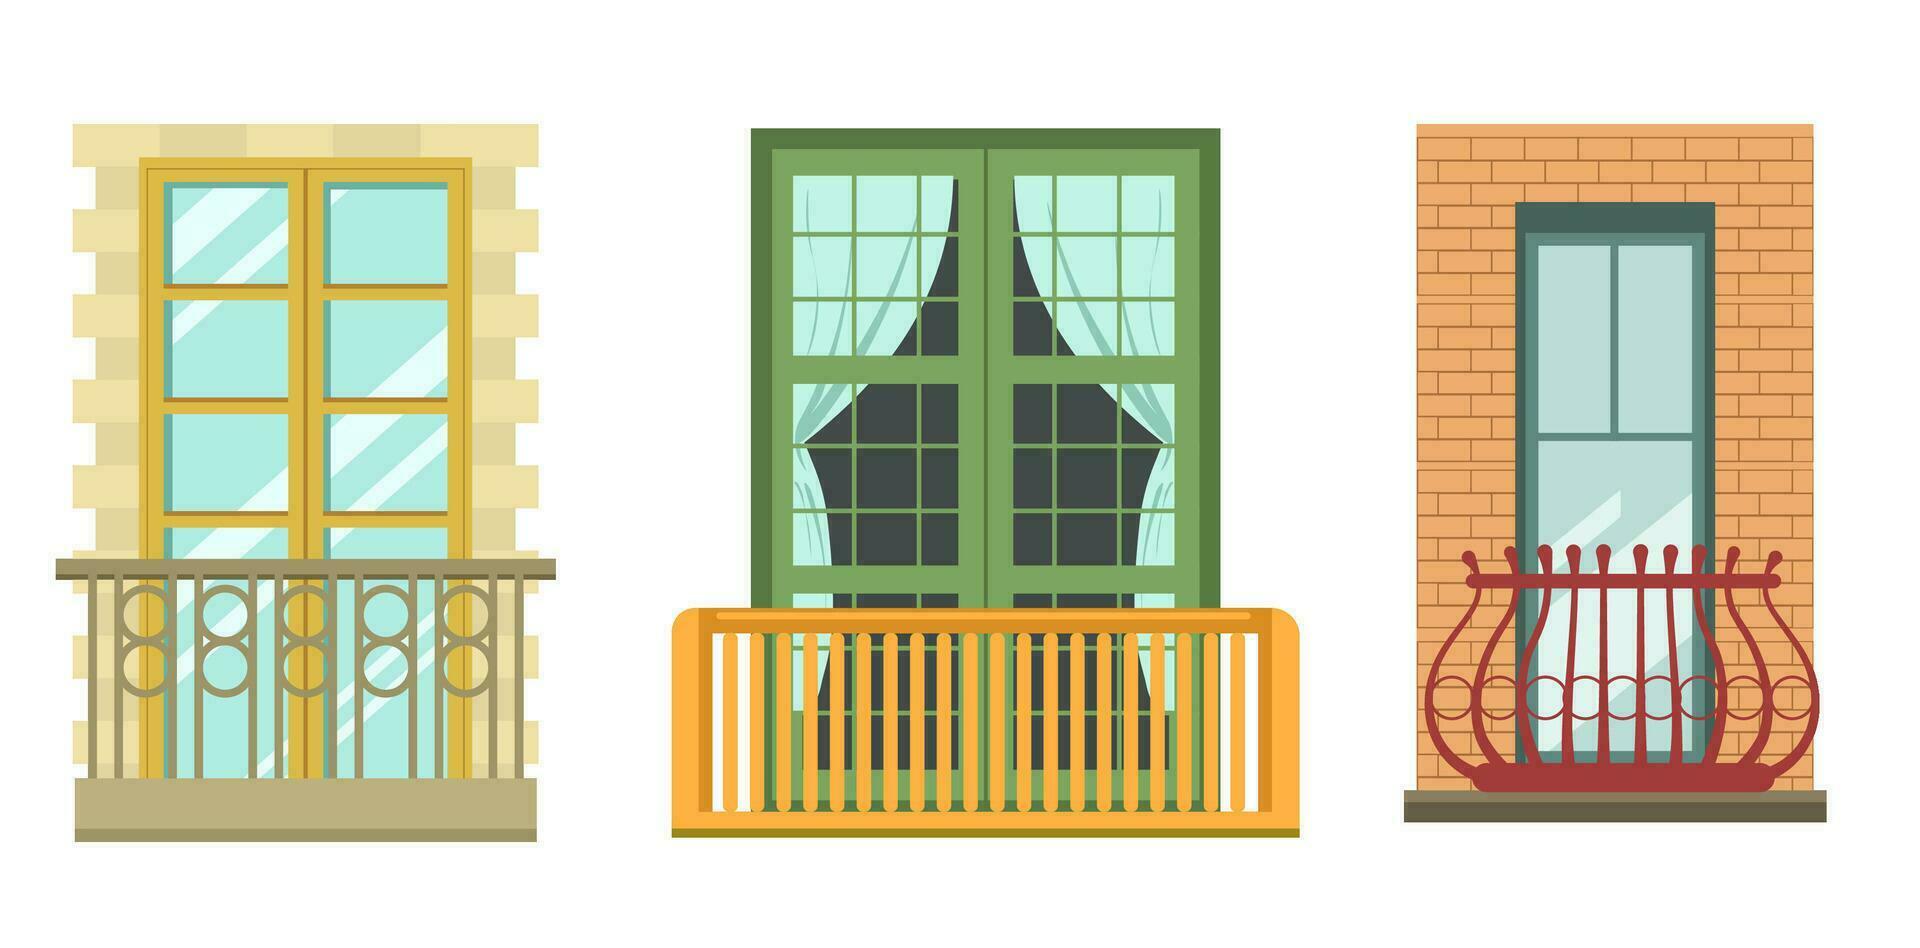 Balconies facade elements, exterior of houses vector